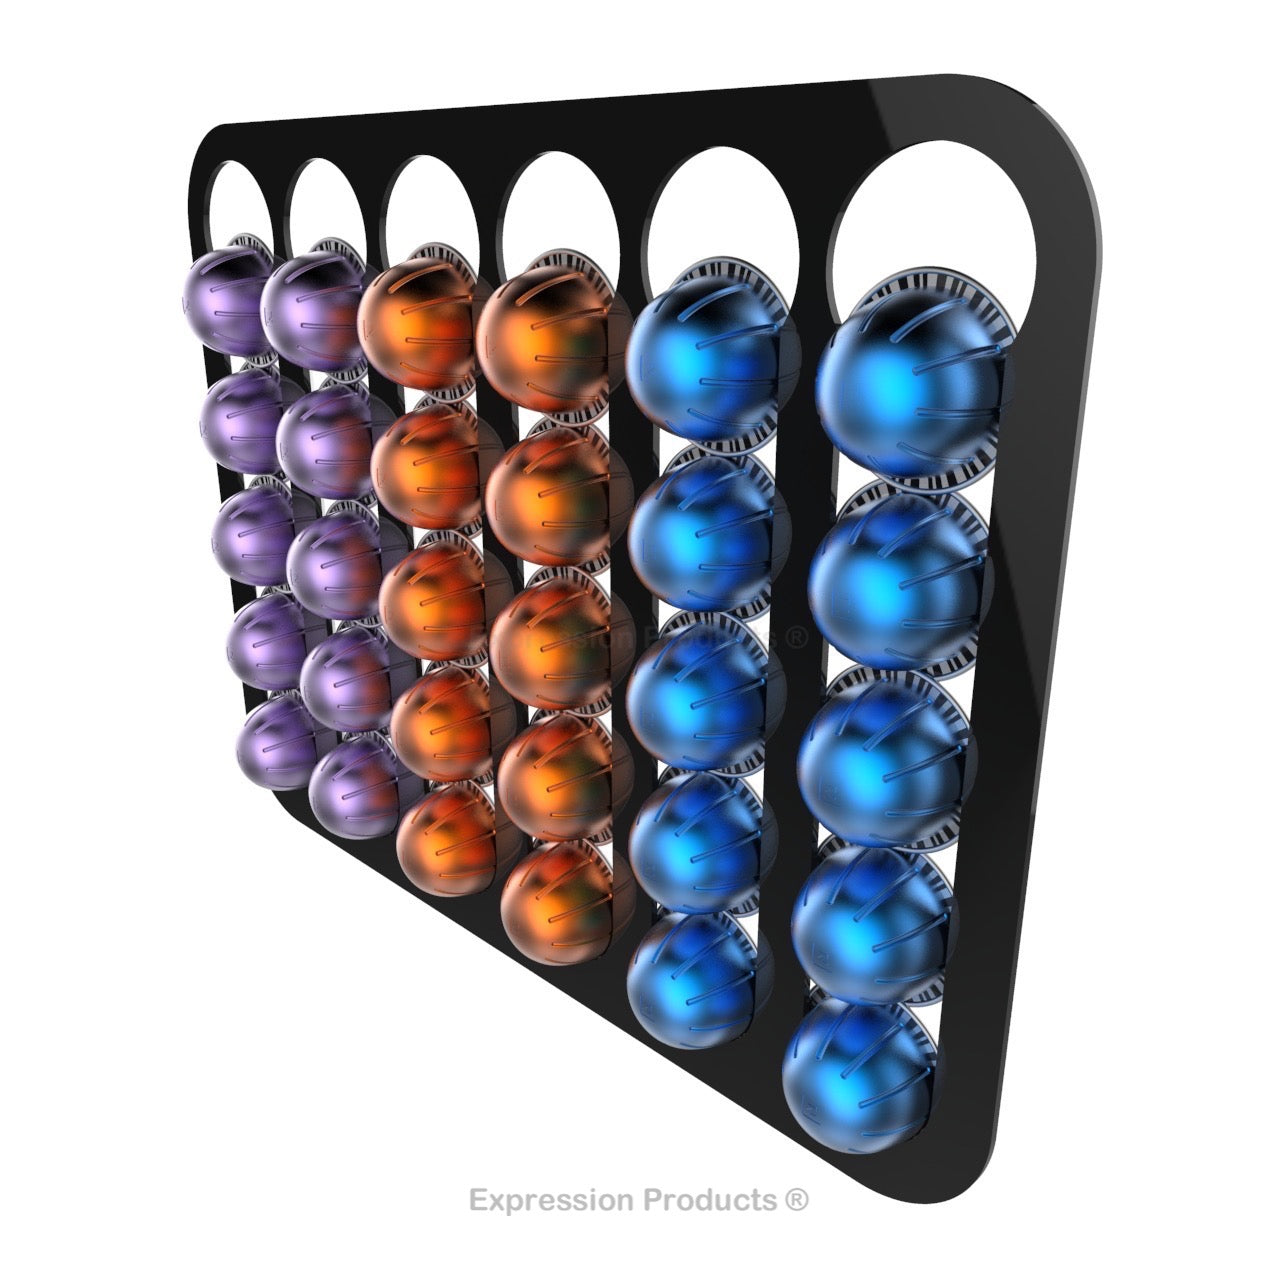 Magnetic Nespresso Vertuo capsule holder shown in black holding 30 pods